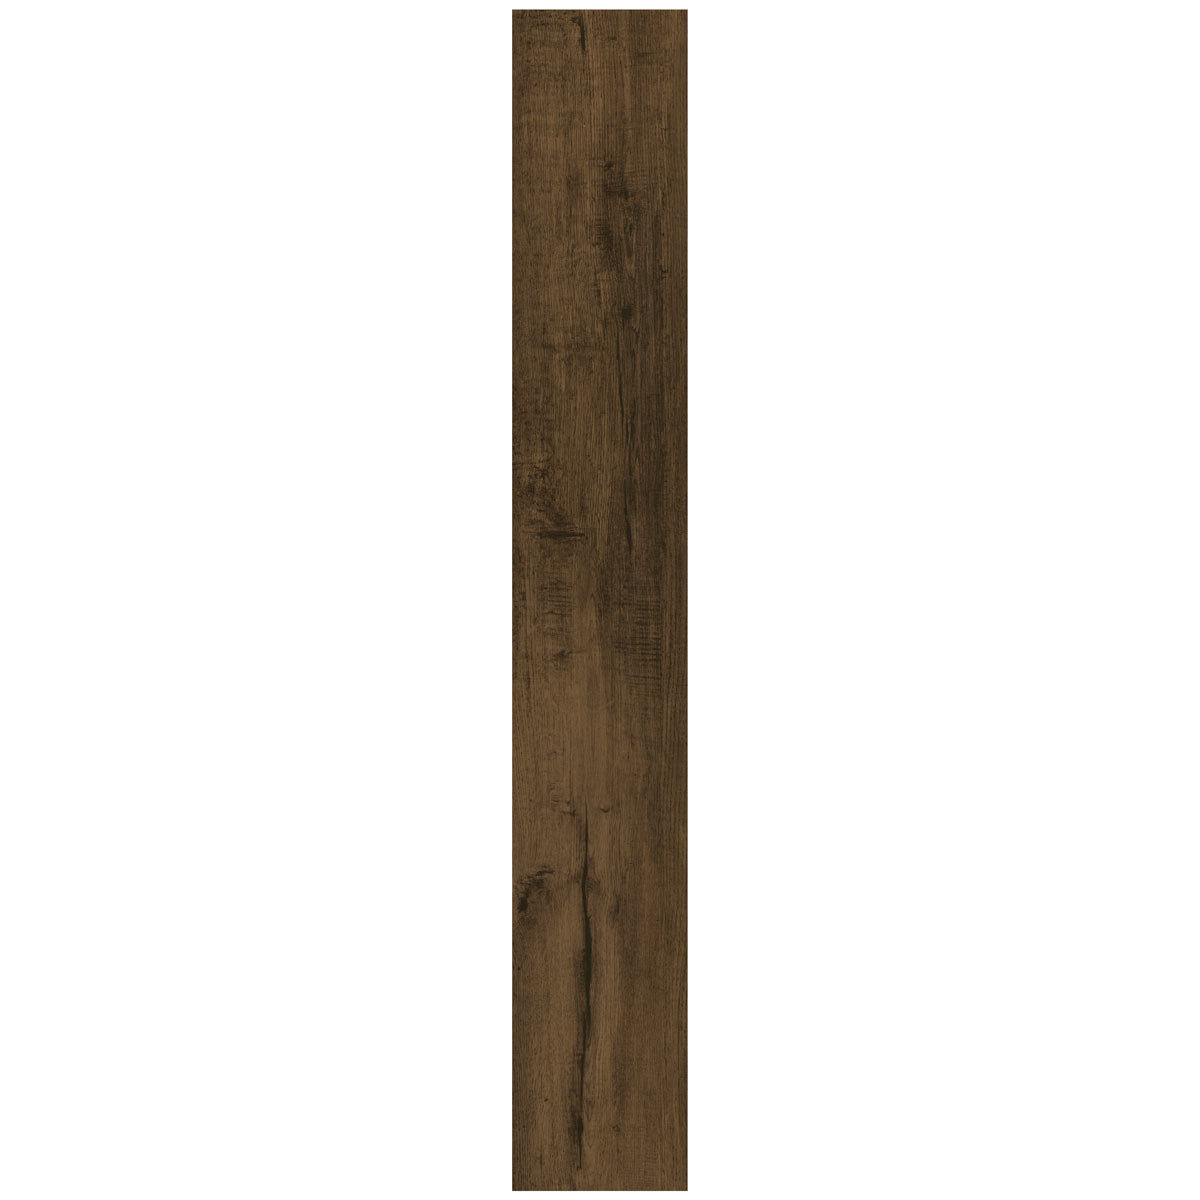 Golden Select Roasted Coffee Rigid Core SPC Luxury Vinyl Flooring Planks with Foam Underlay - 1.33 m² Per Pack